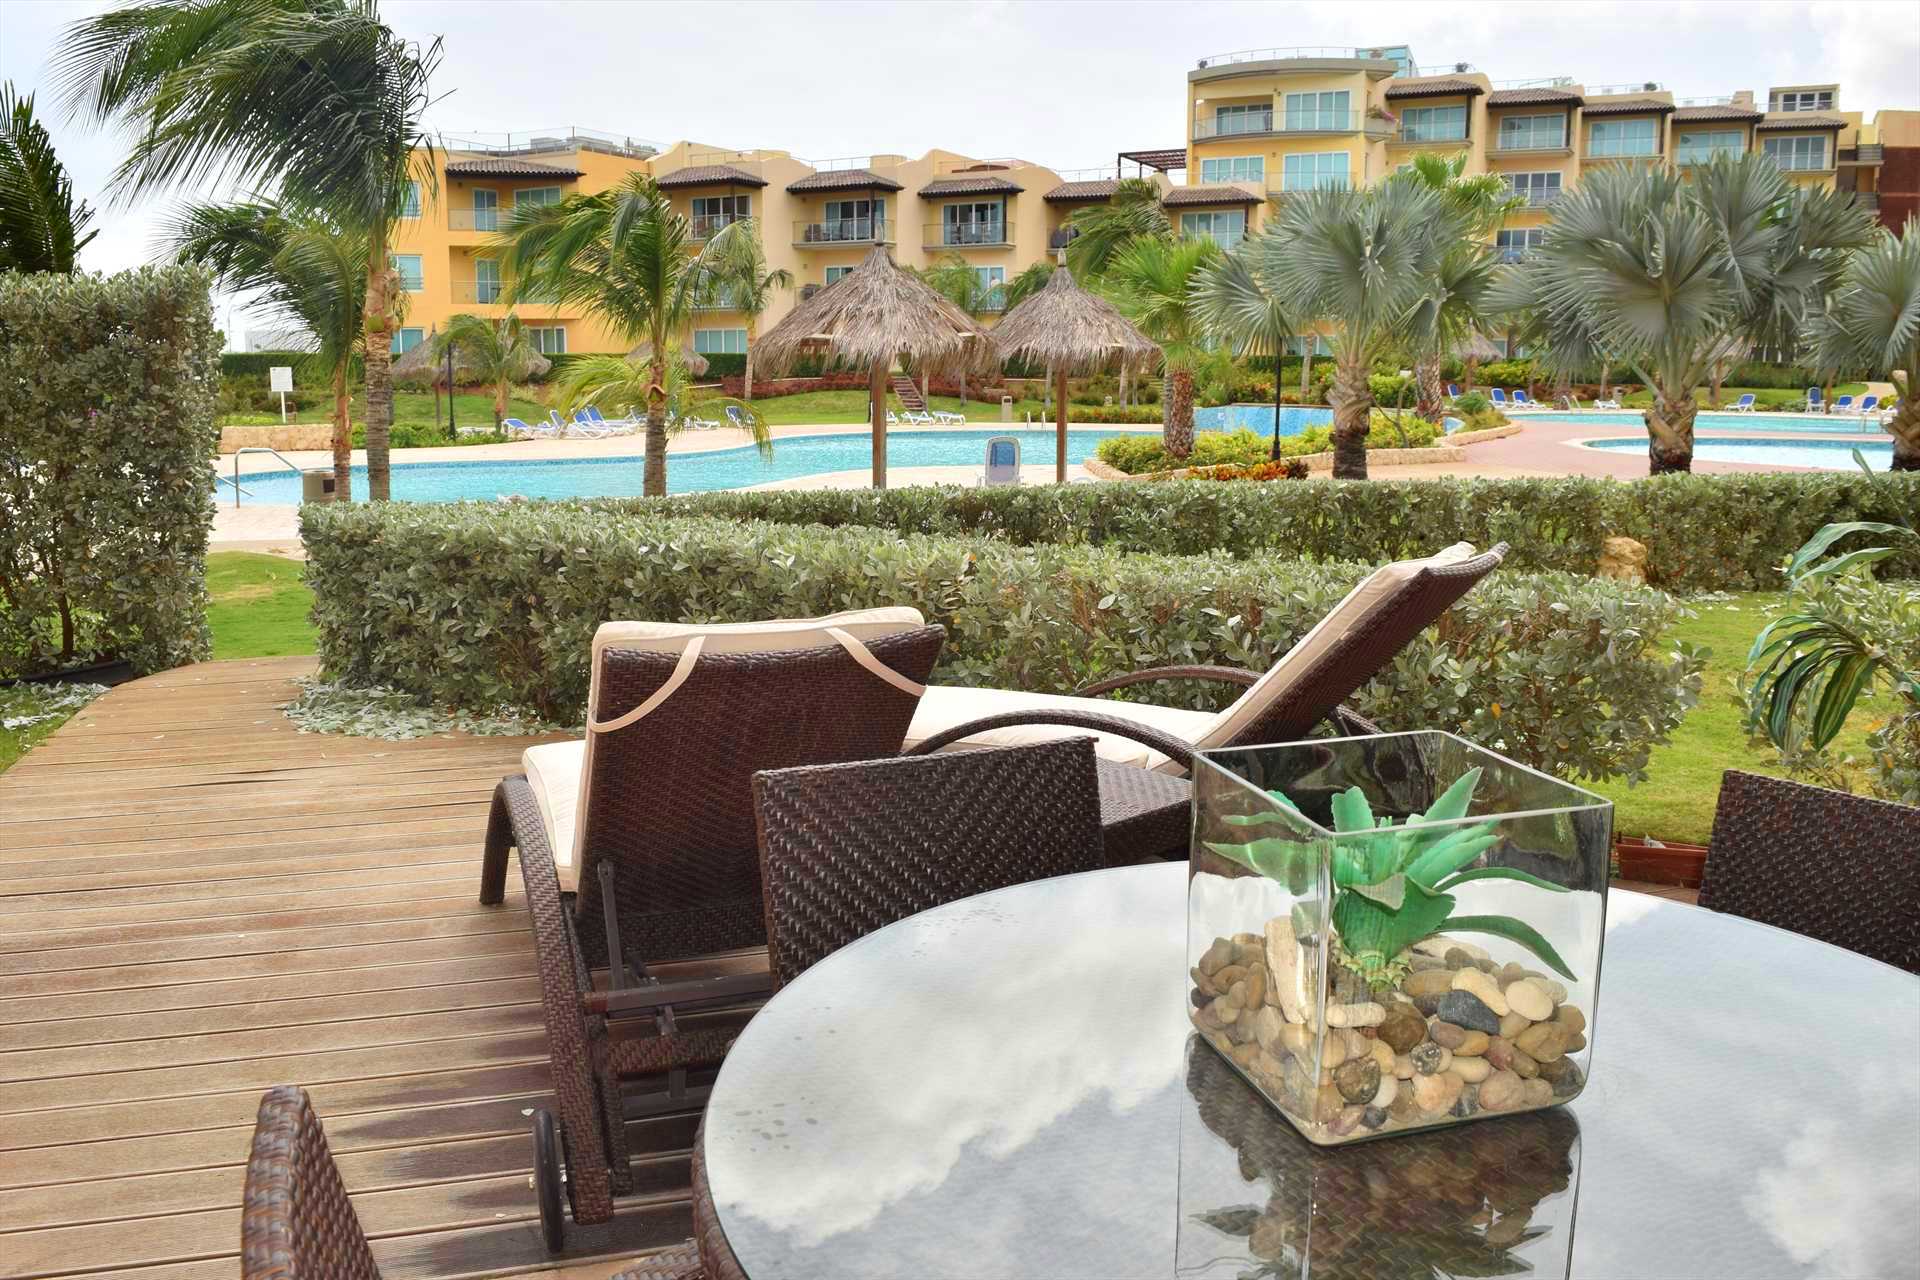 Grand Regency at EAGLE BEACH, ARUBA. Property offers a stunning pool overlooking beach views.